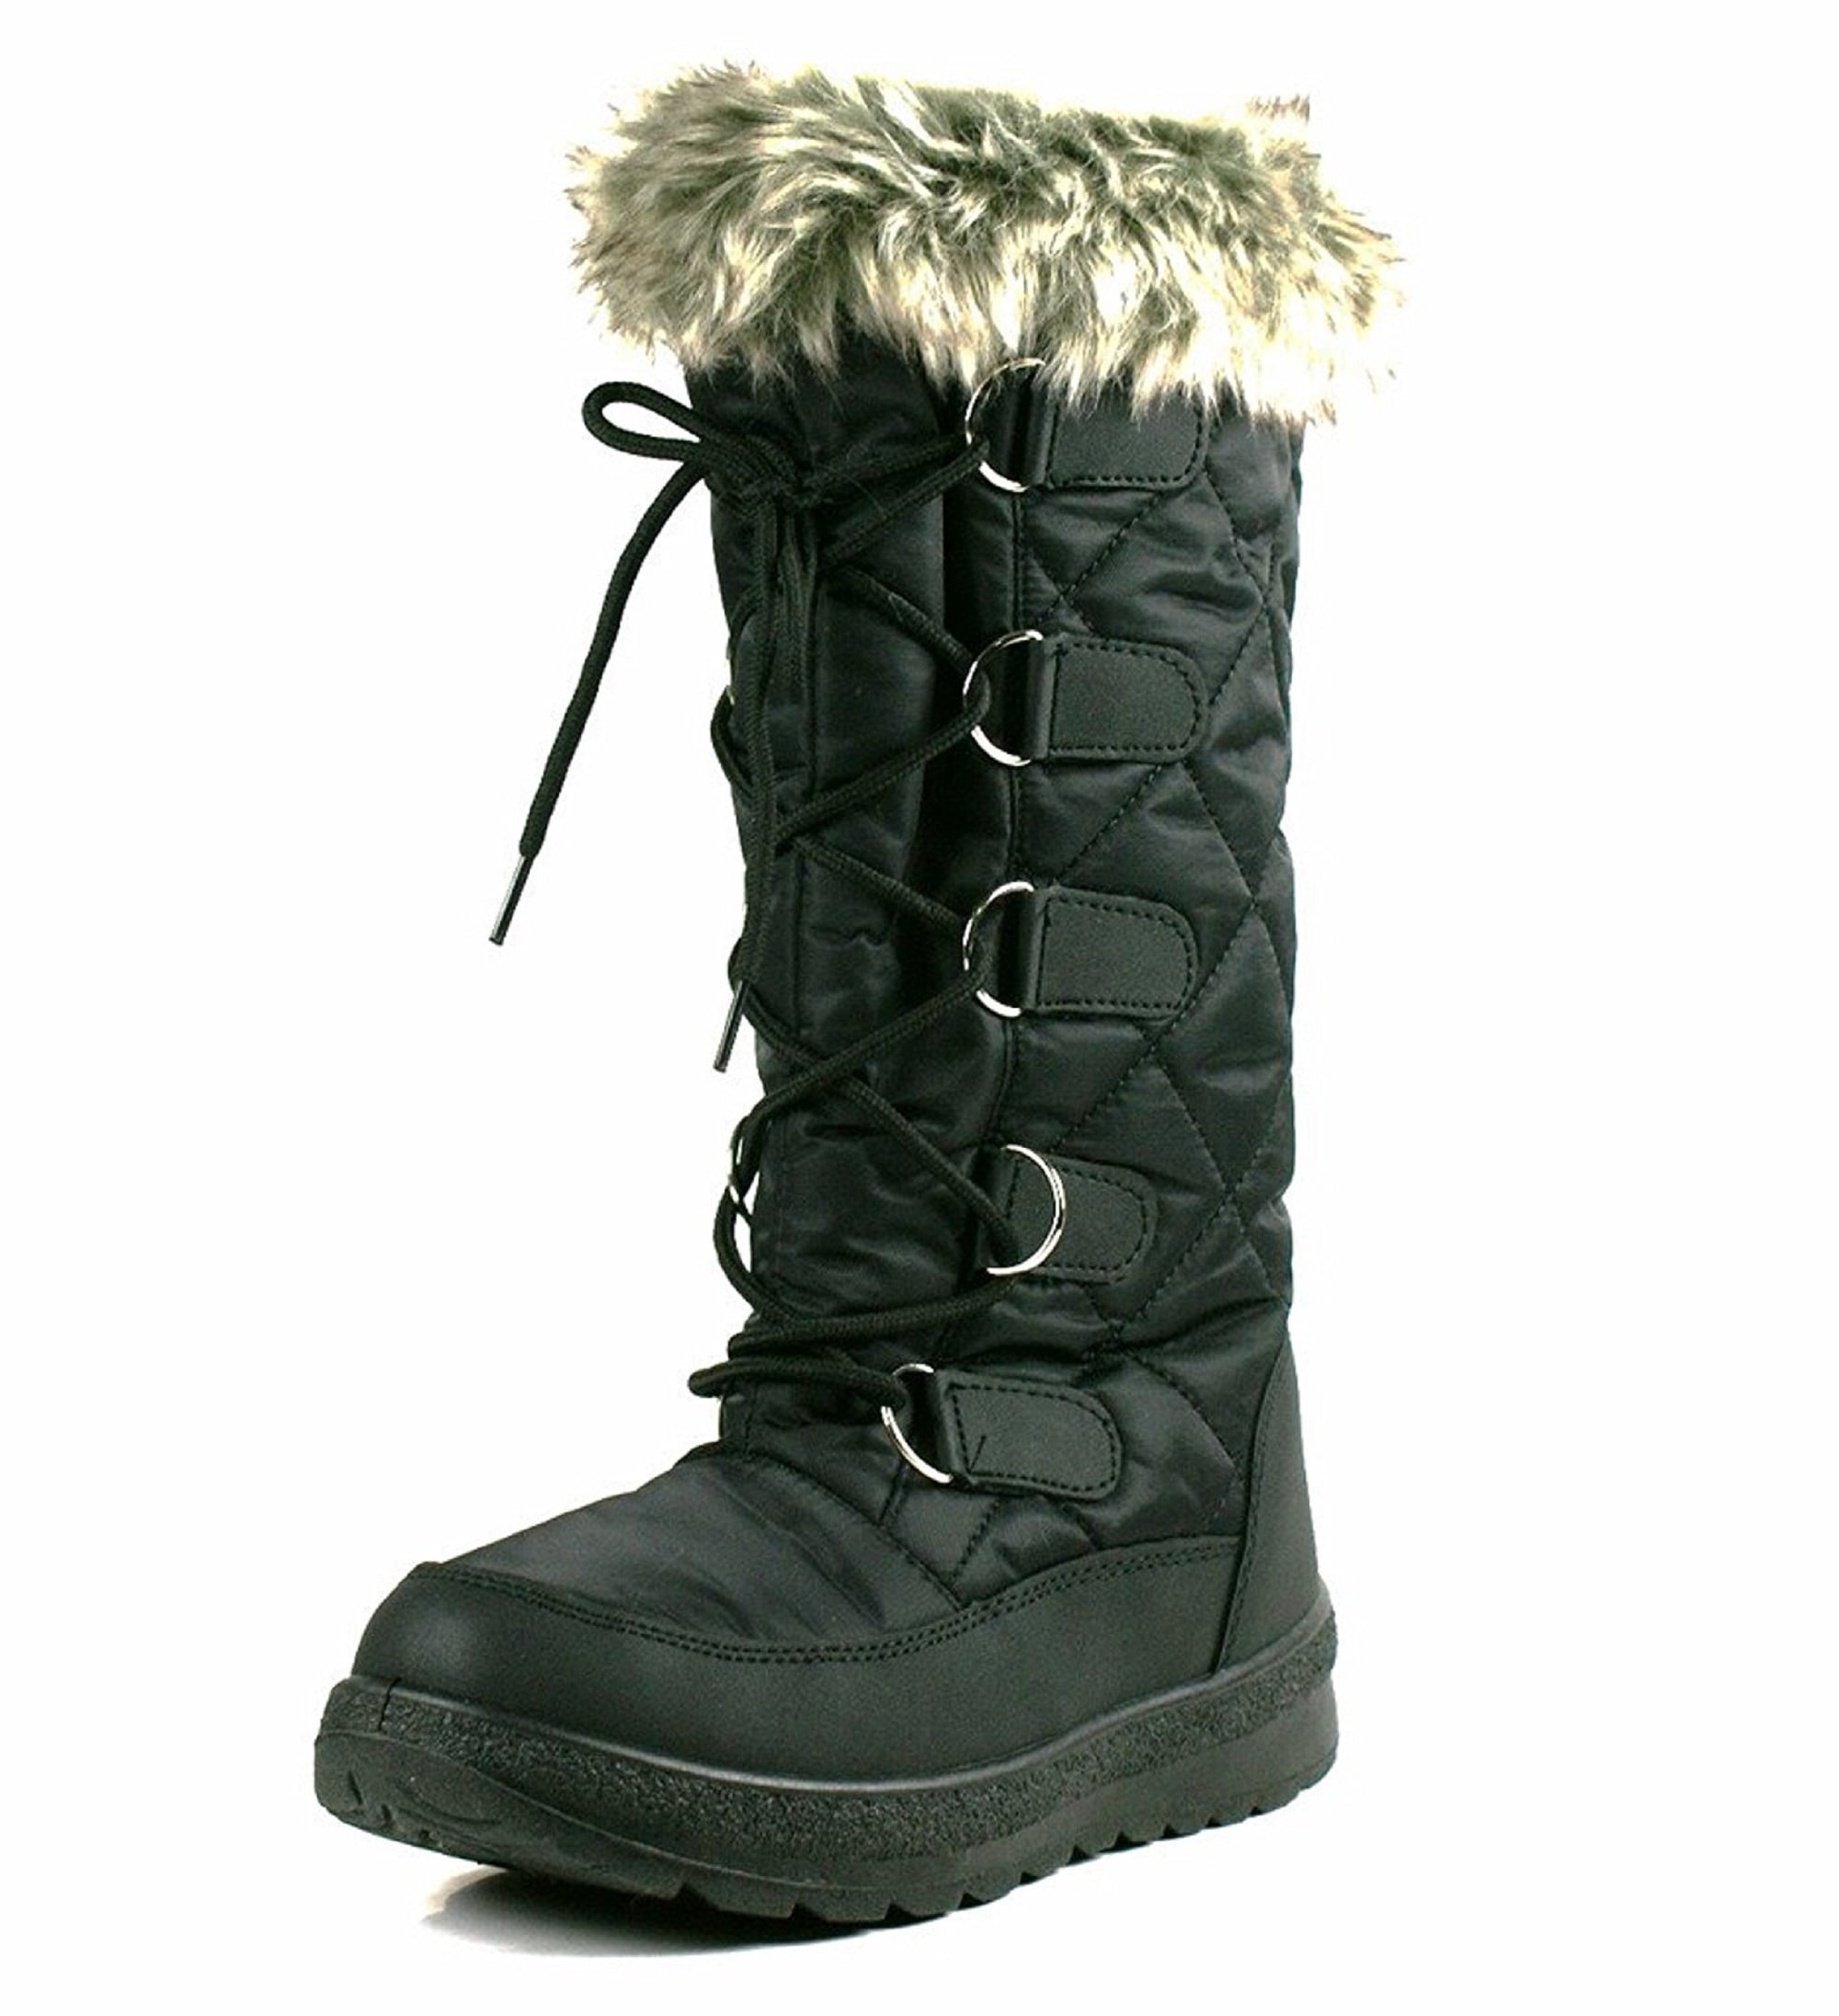 Black Black Friday Women's Snow Boots 